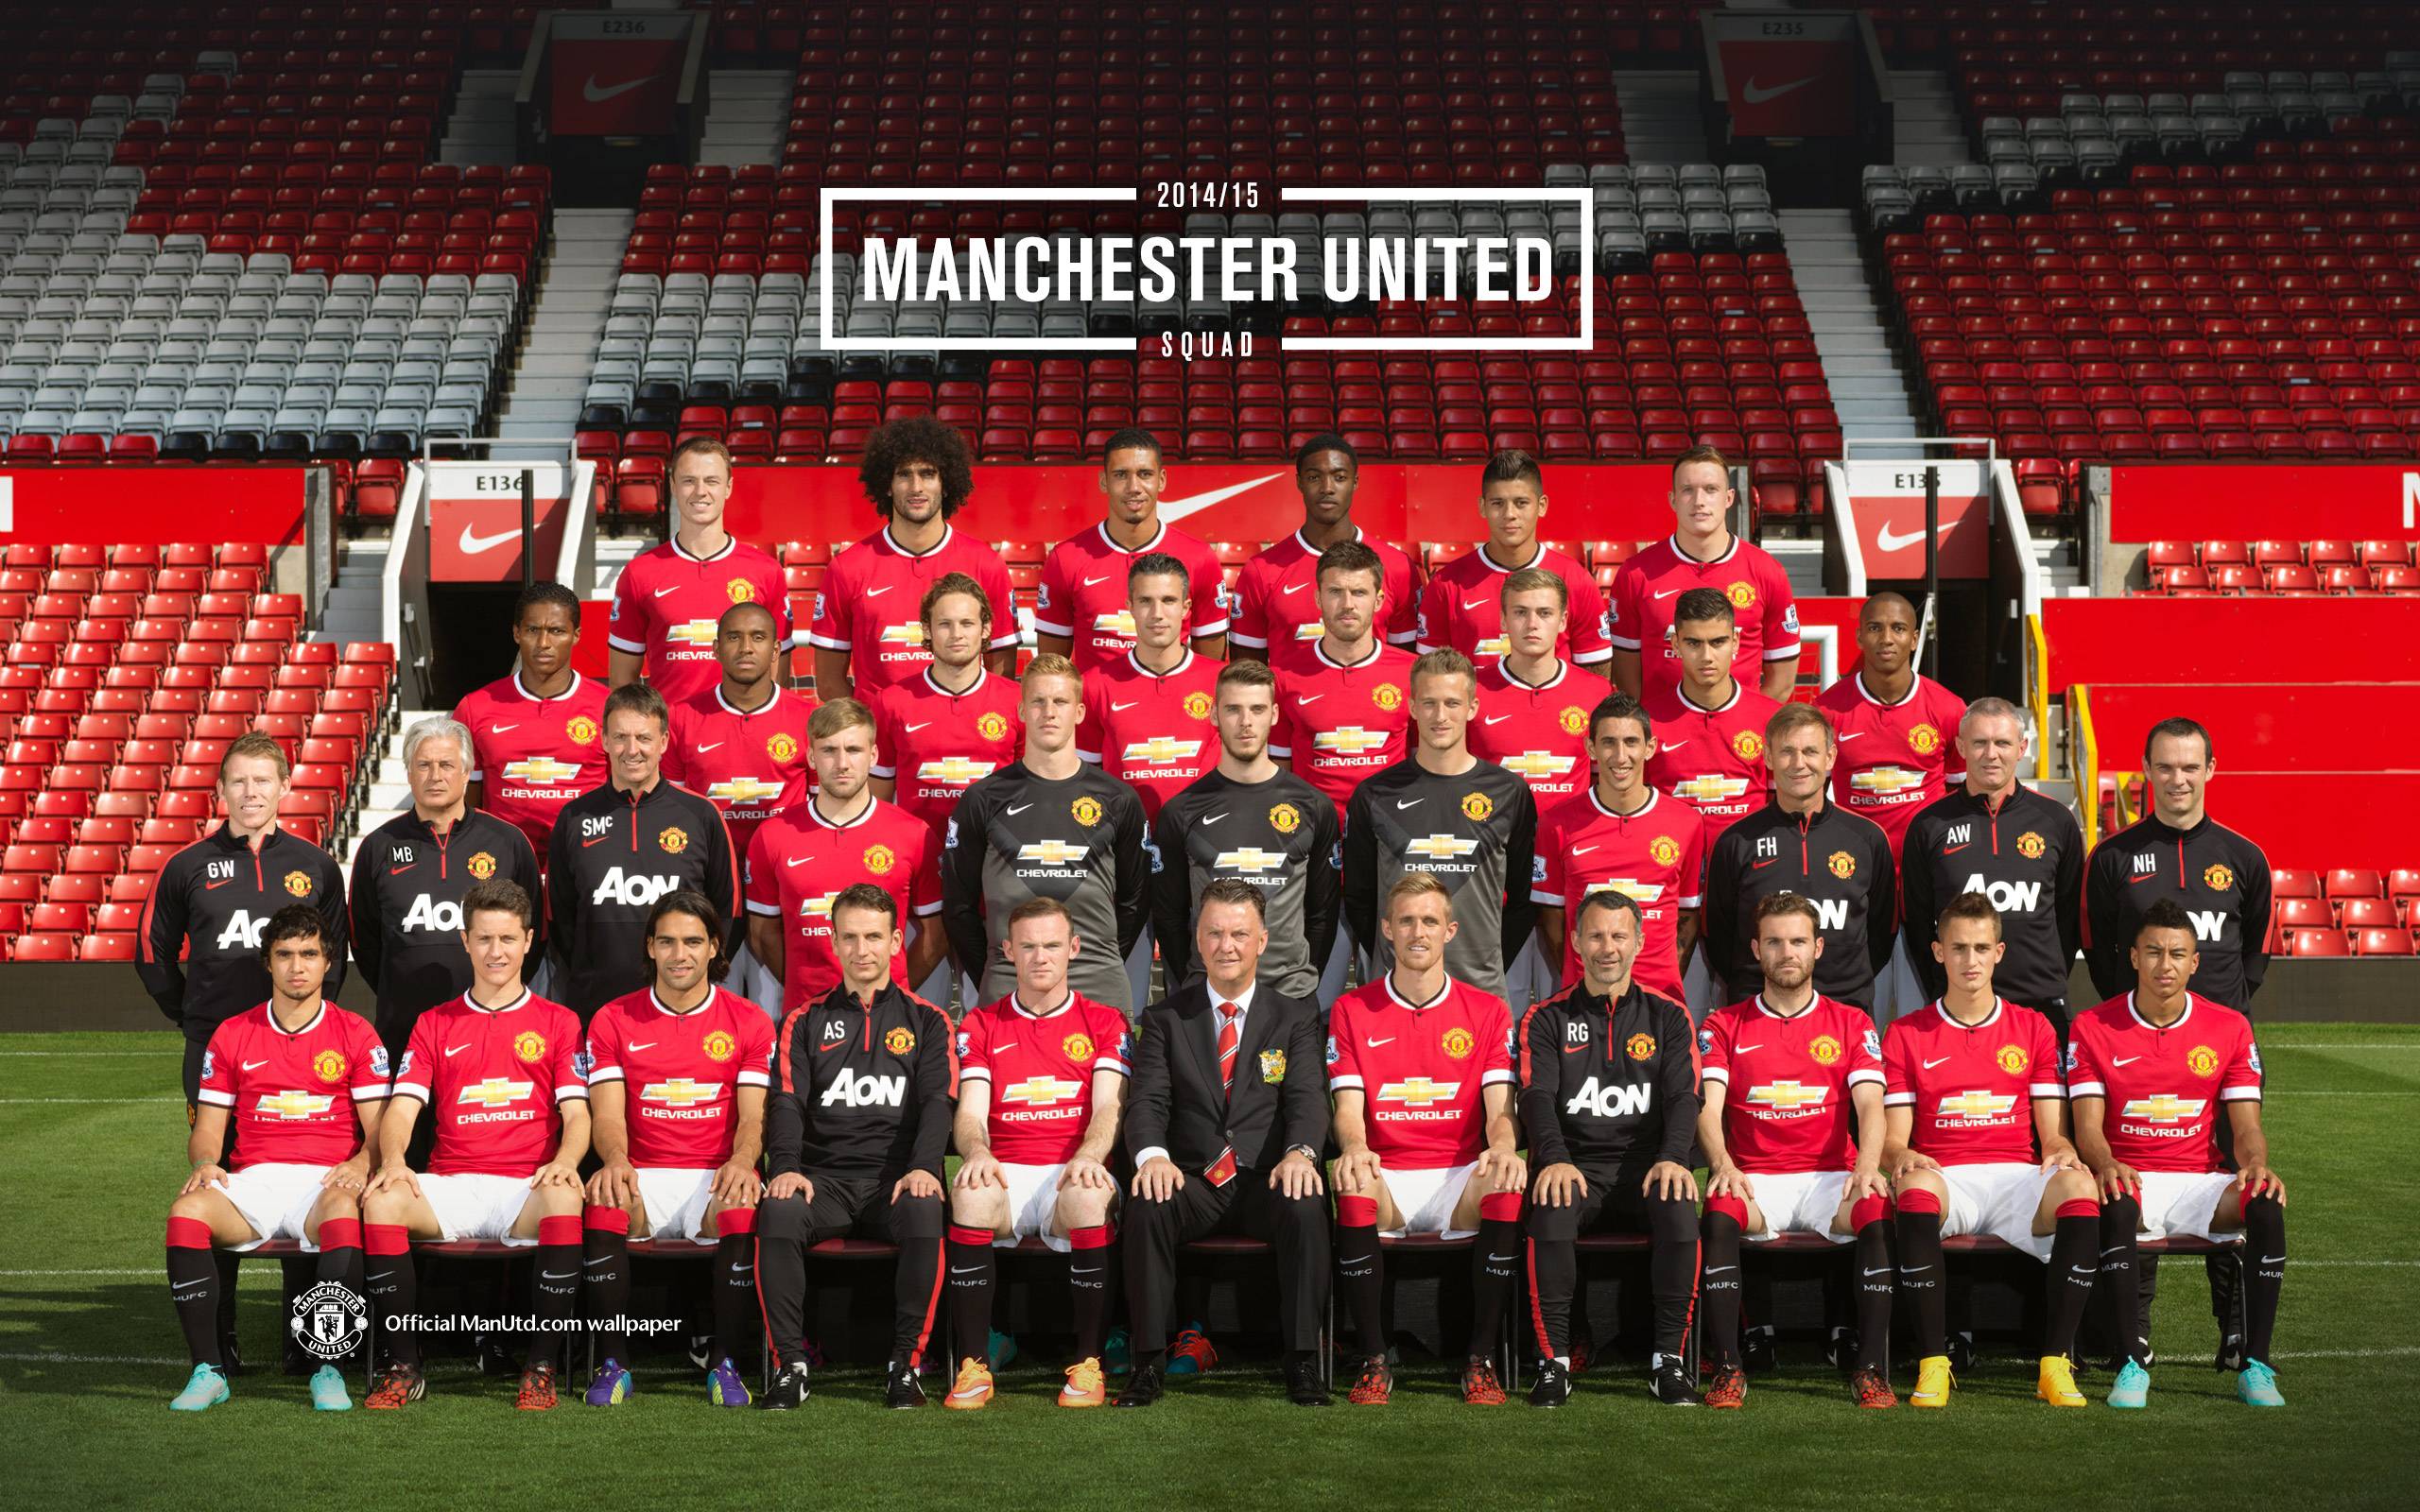 Wallpapers Logo Manchester United Terbaru 2015 Wallpaper Cave